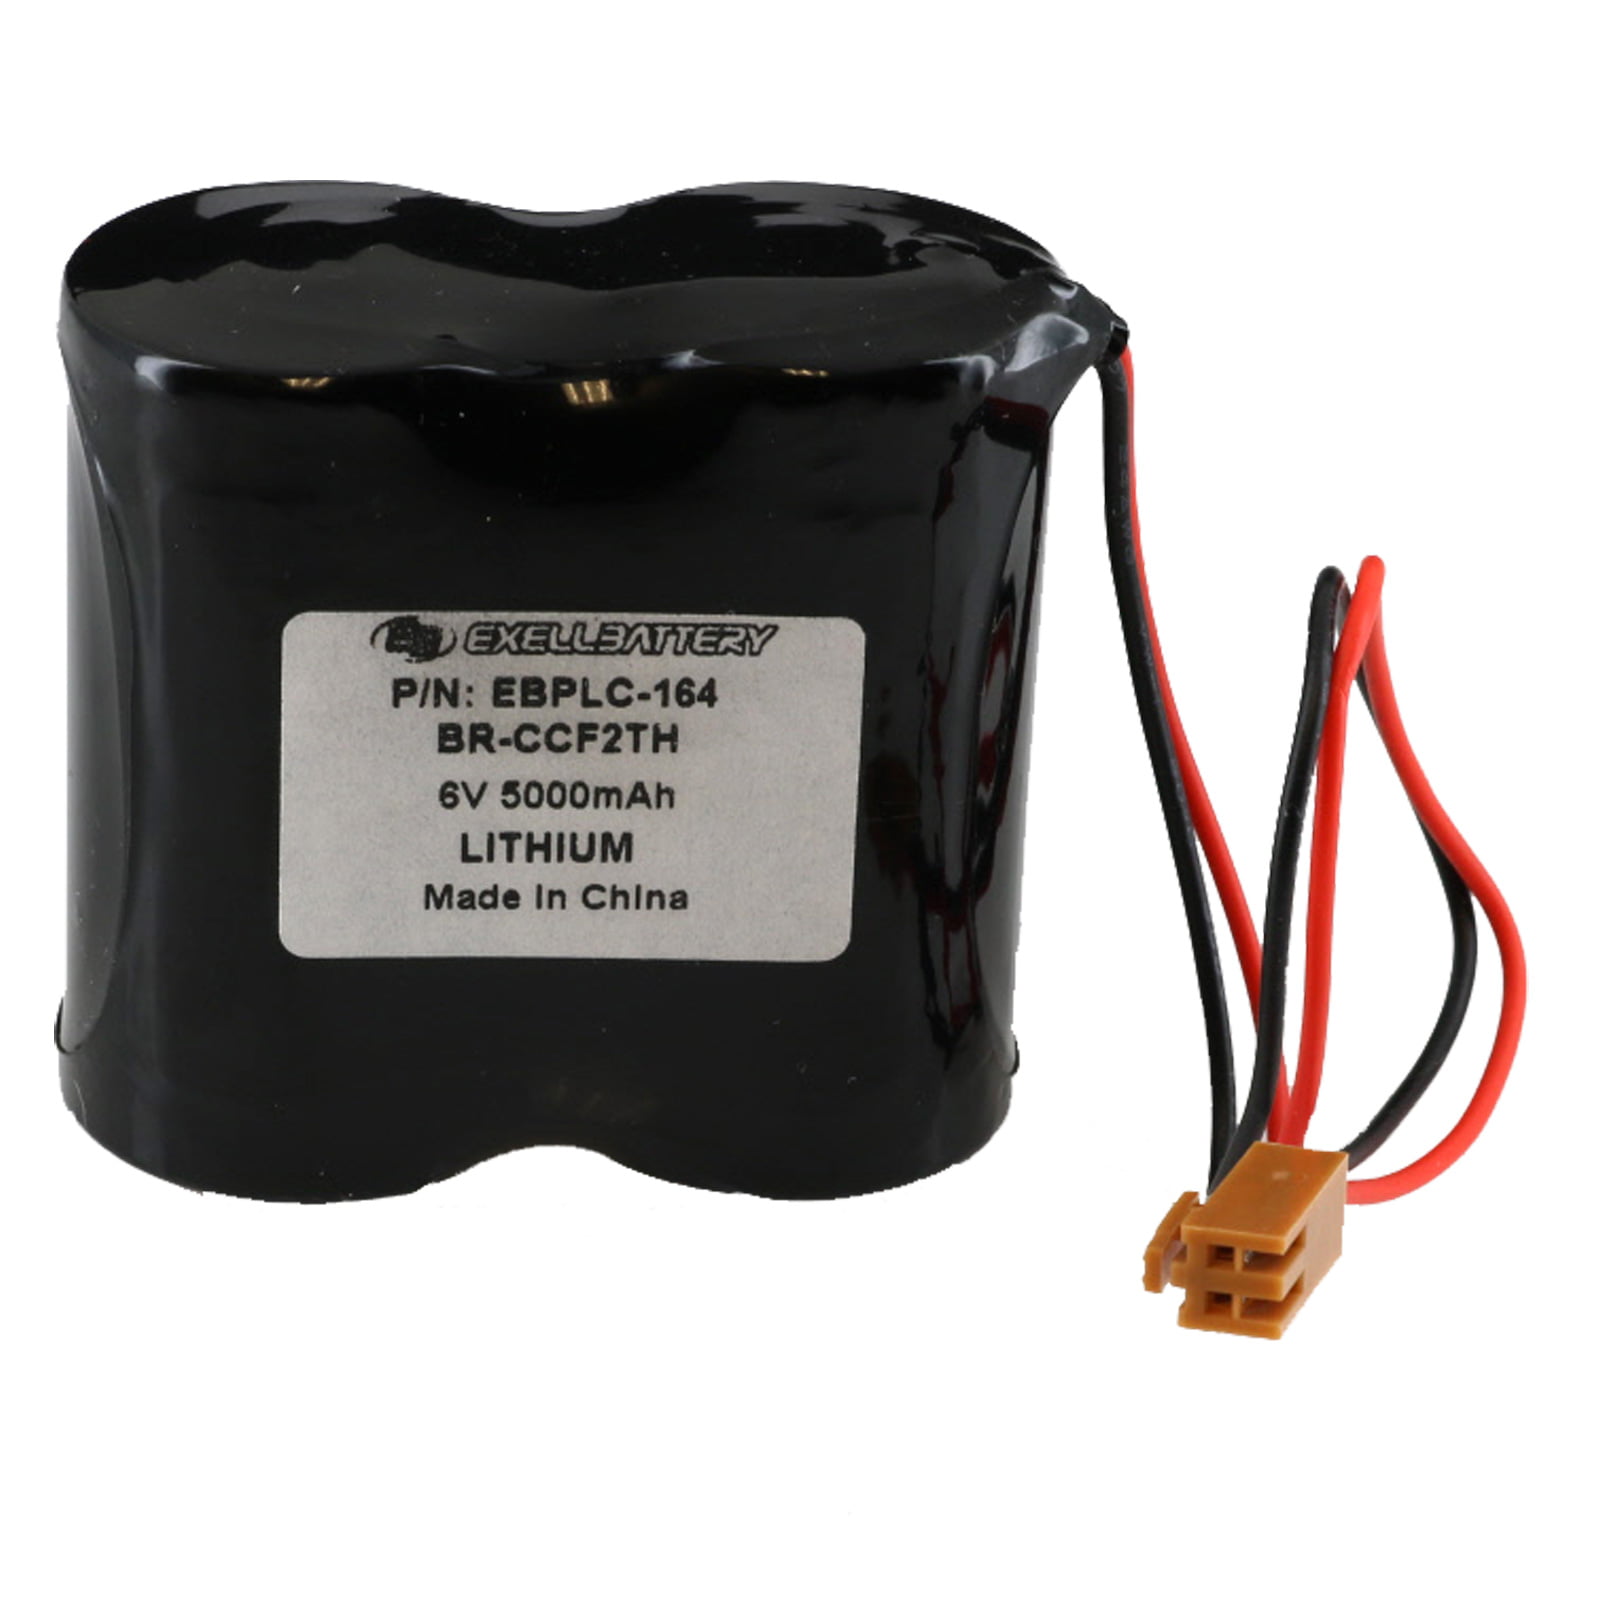 3 Pack BR-CCF2TH A98l-0001-0902 6V 5000mAh Backup Battery for Fanuc controls 